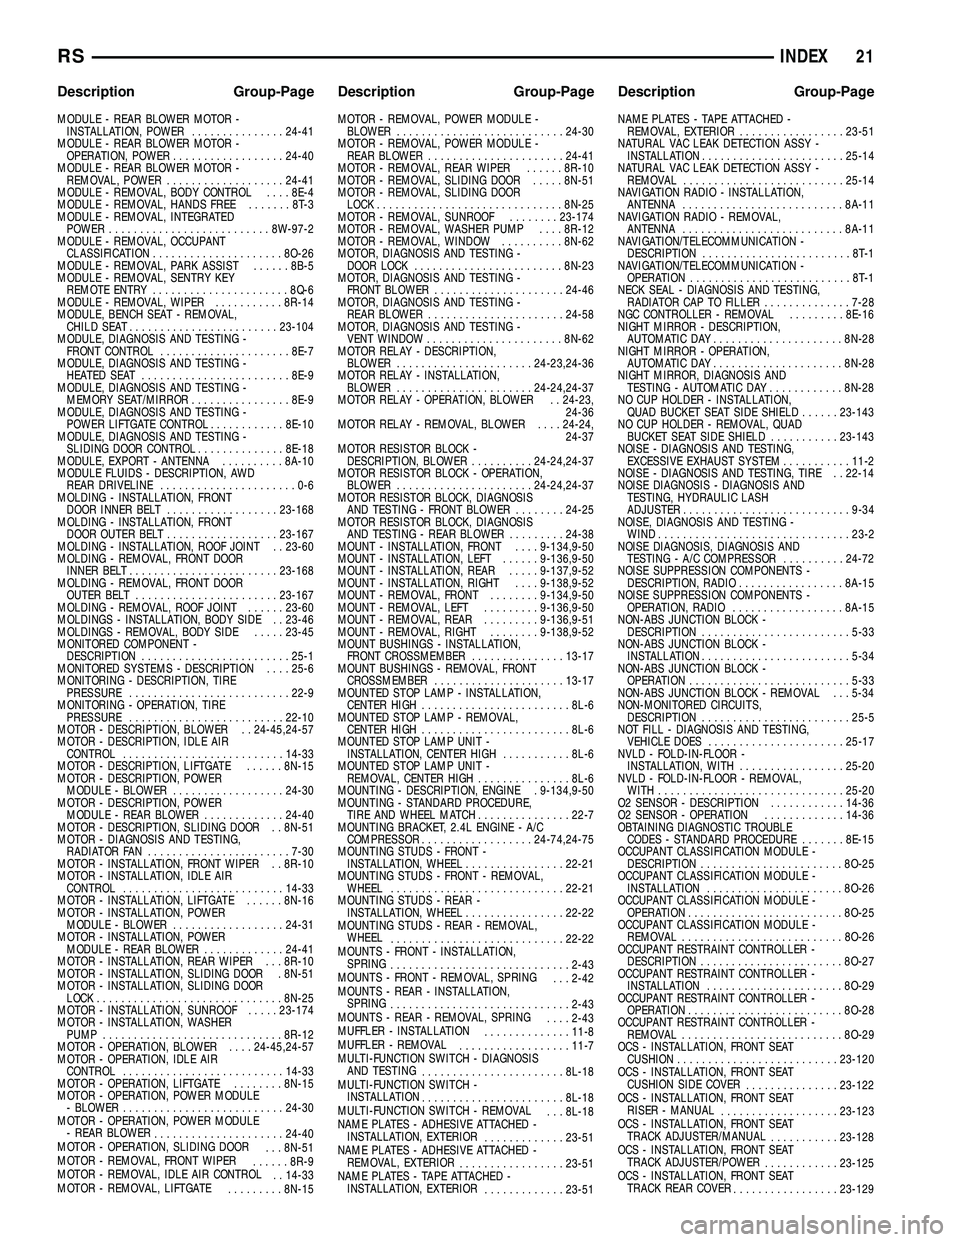 CHRYSLER CARAVAN 2005 Manual PDF MODULE - REAR BLOWER MOTOR -INSTALLATION, POWER ...............24-41
MODULE - REAR BLOWER MOTOR - OPERATION, POWER .................. 24-40
MODULE - REAR BLOWER MOTOR - REMOVAL, POWER ................